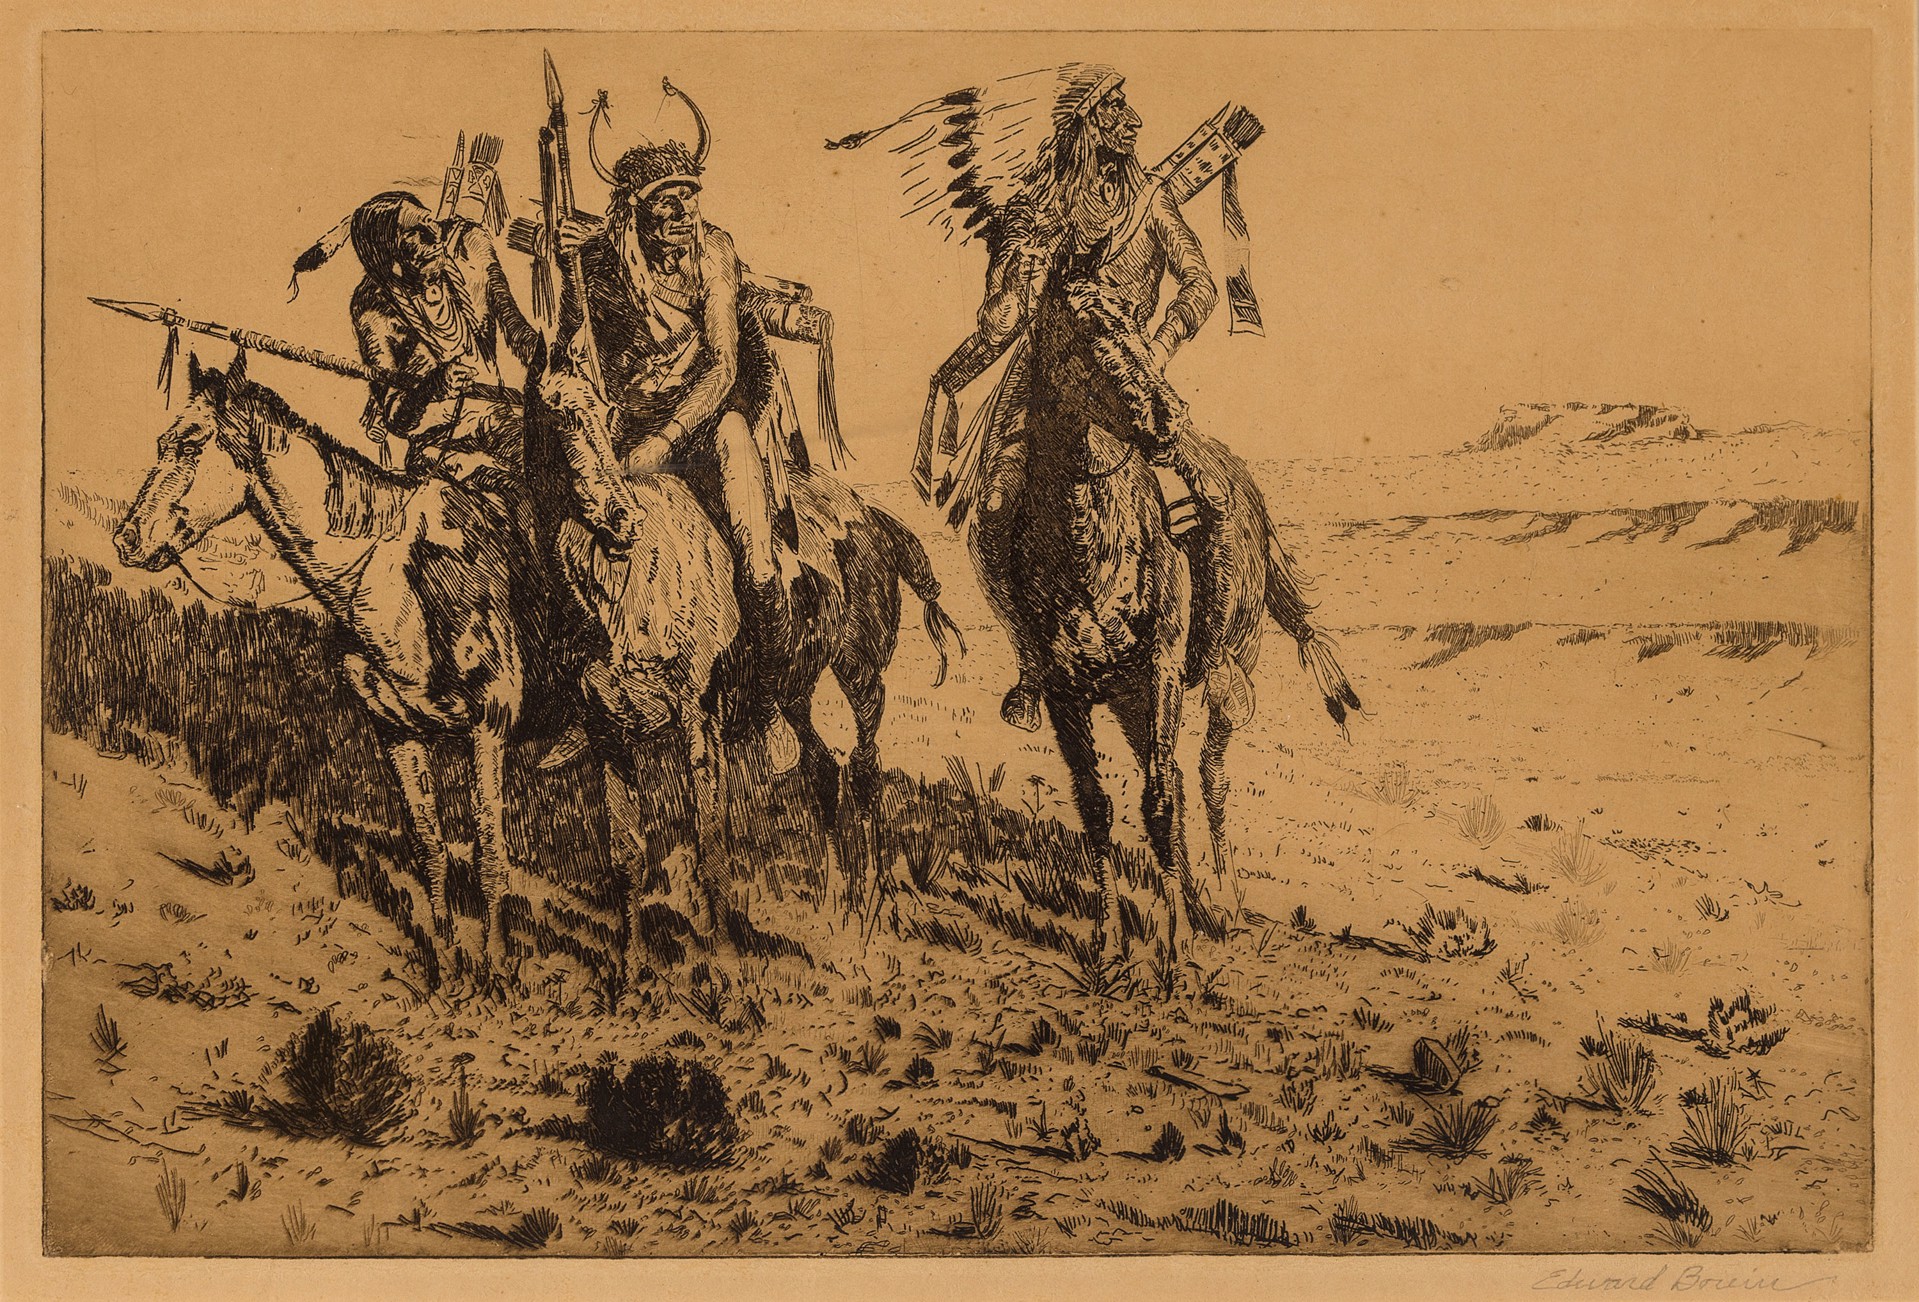 Sioux Chief by Edward Borein